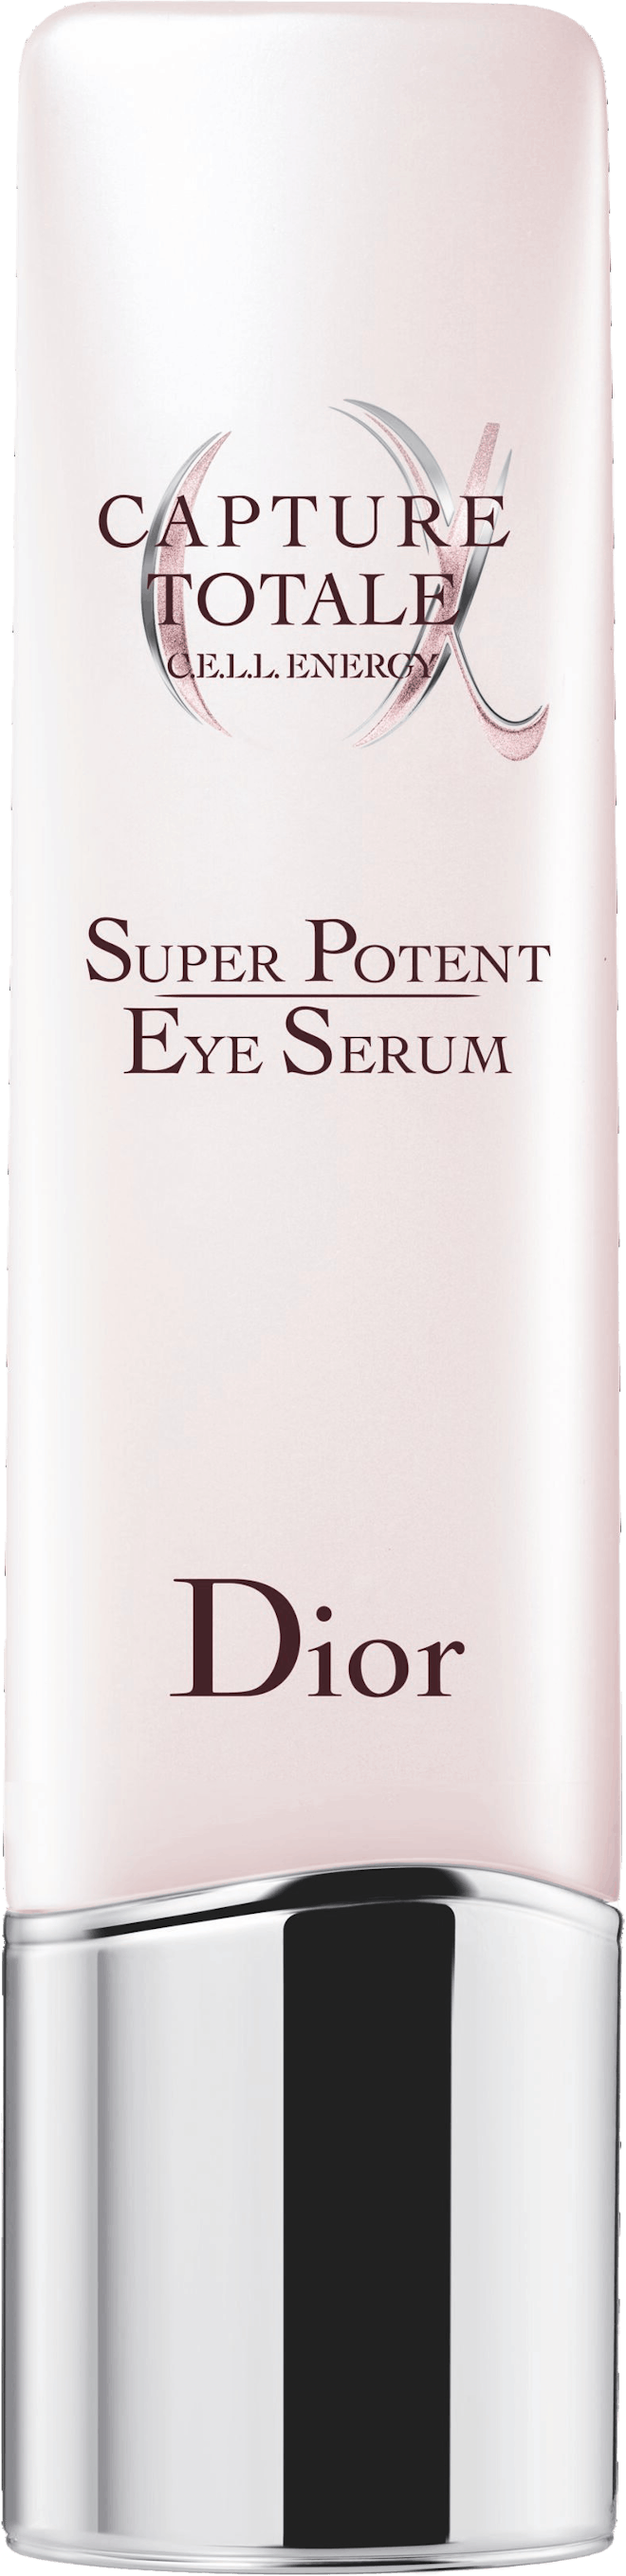 Dior Eye Serum